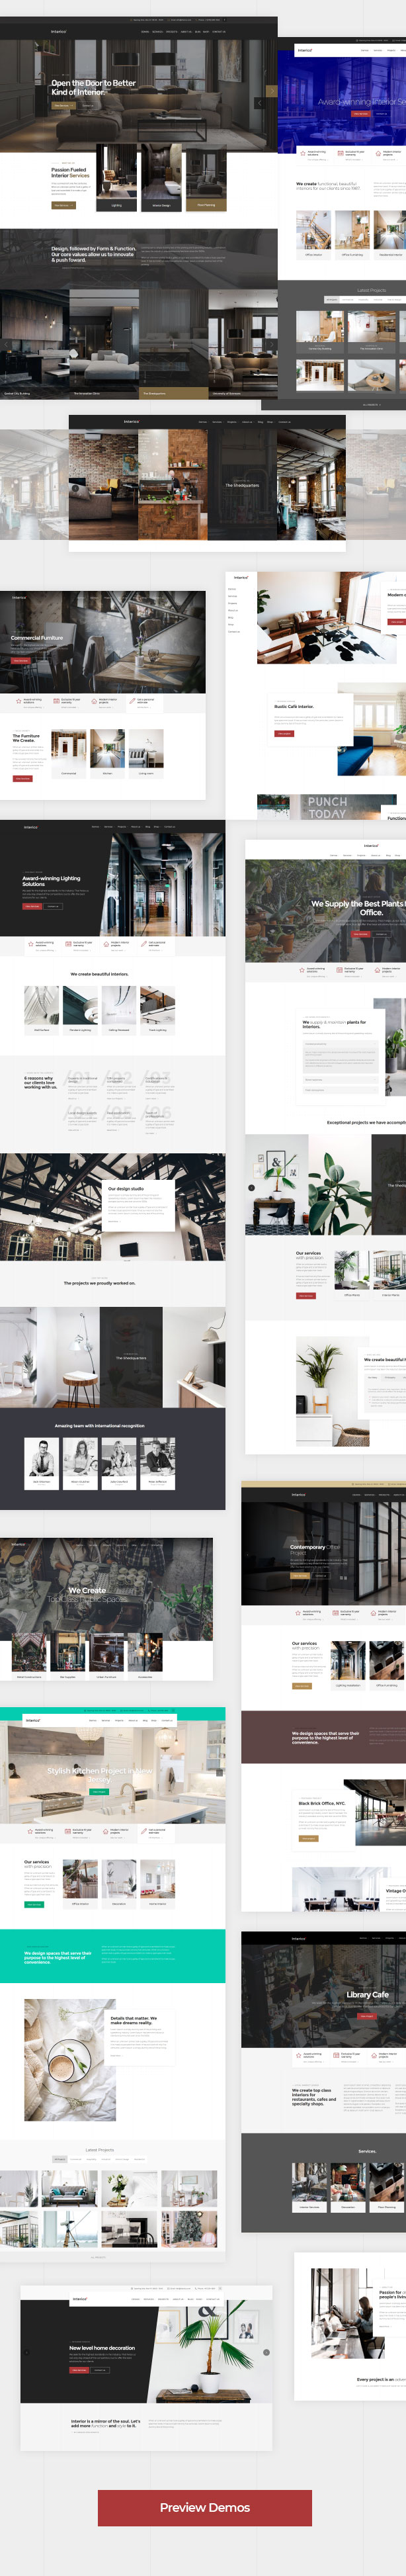 Stylish demos for Interior design, Architecture & Furniture Websites